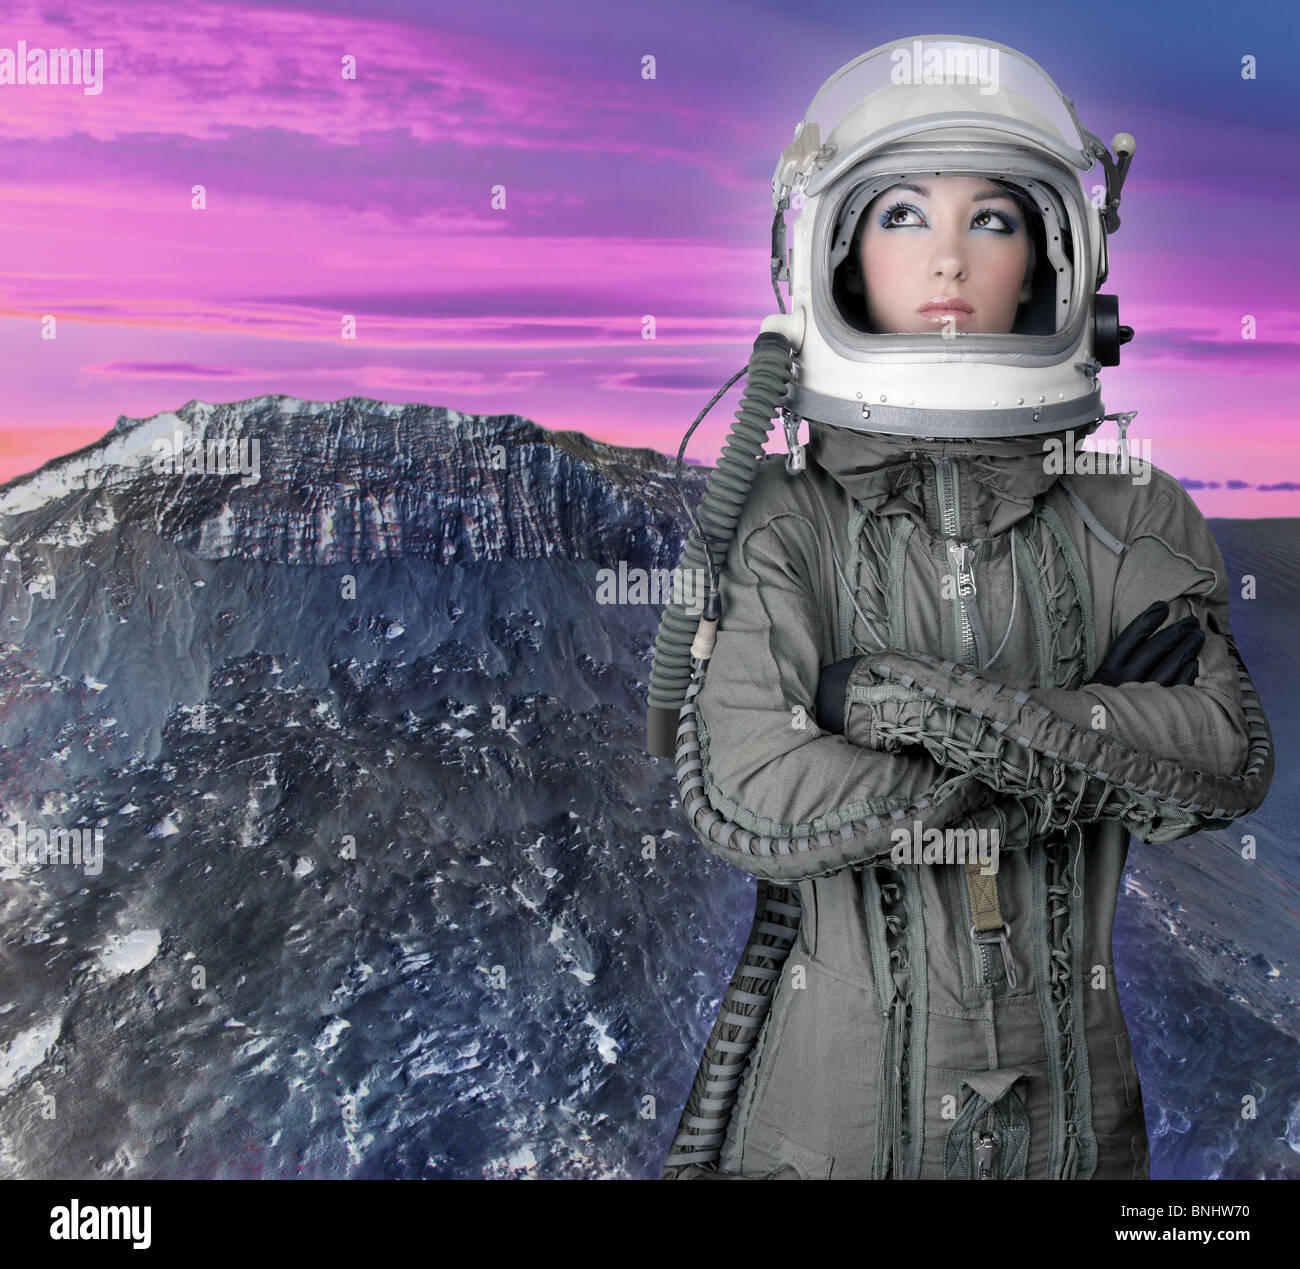 astronaut spaceship aircraft helmet fashion woman mars moon planet Stock Photo